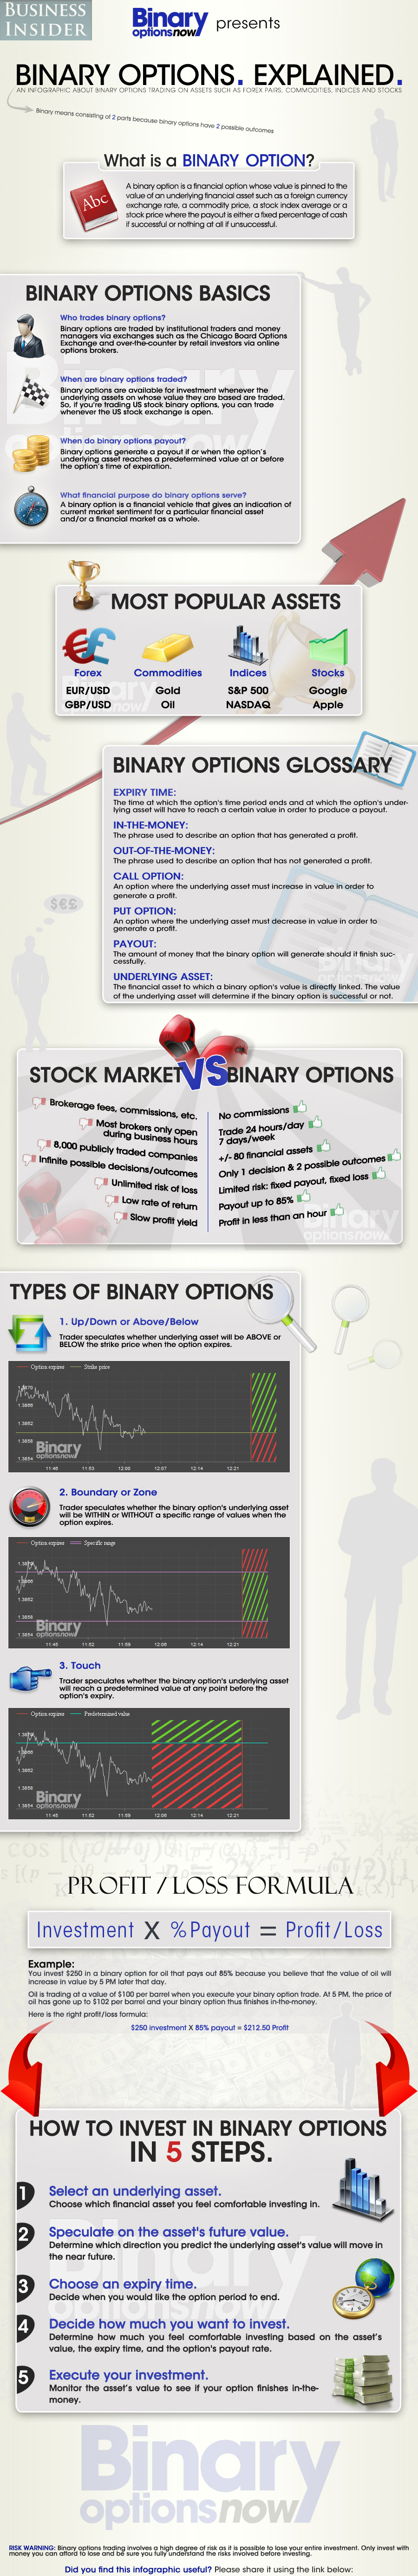 Binary options business model